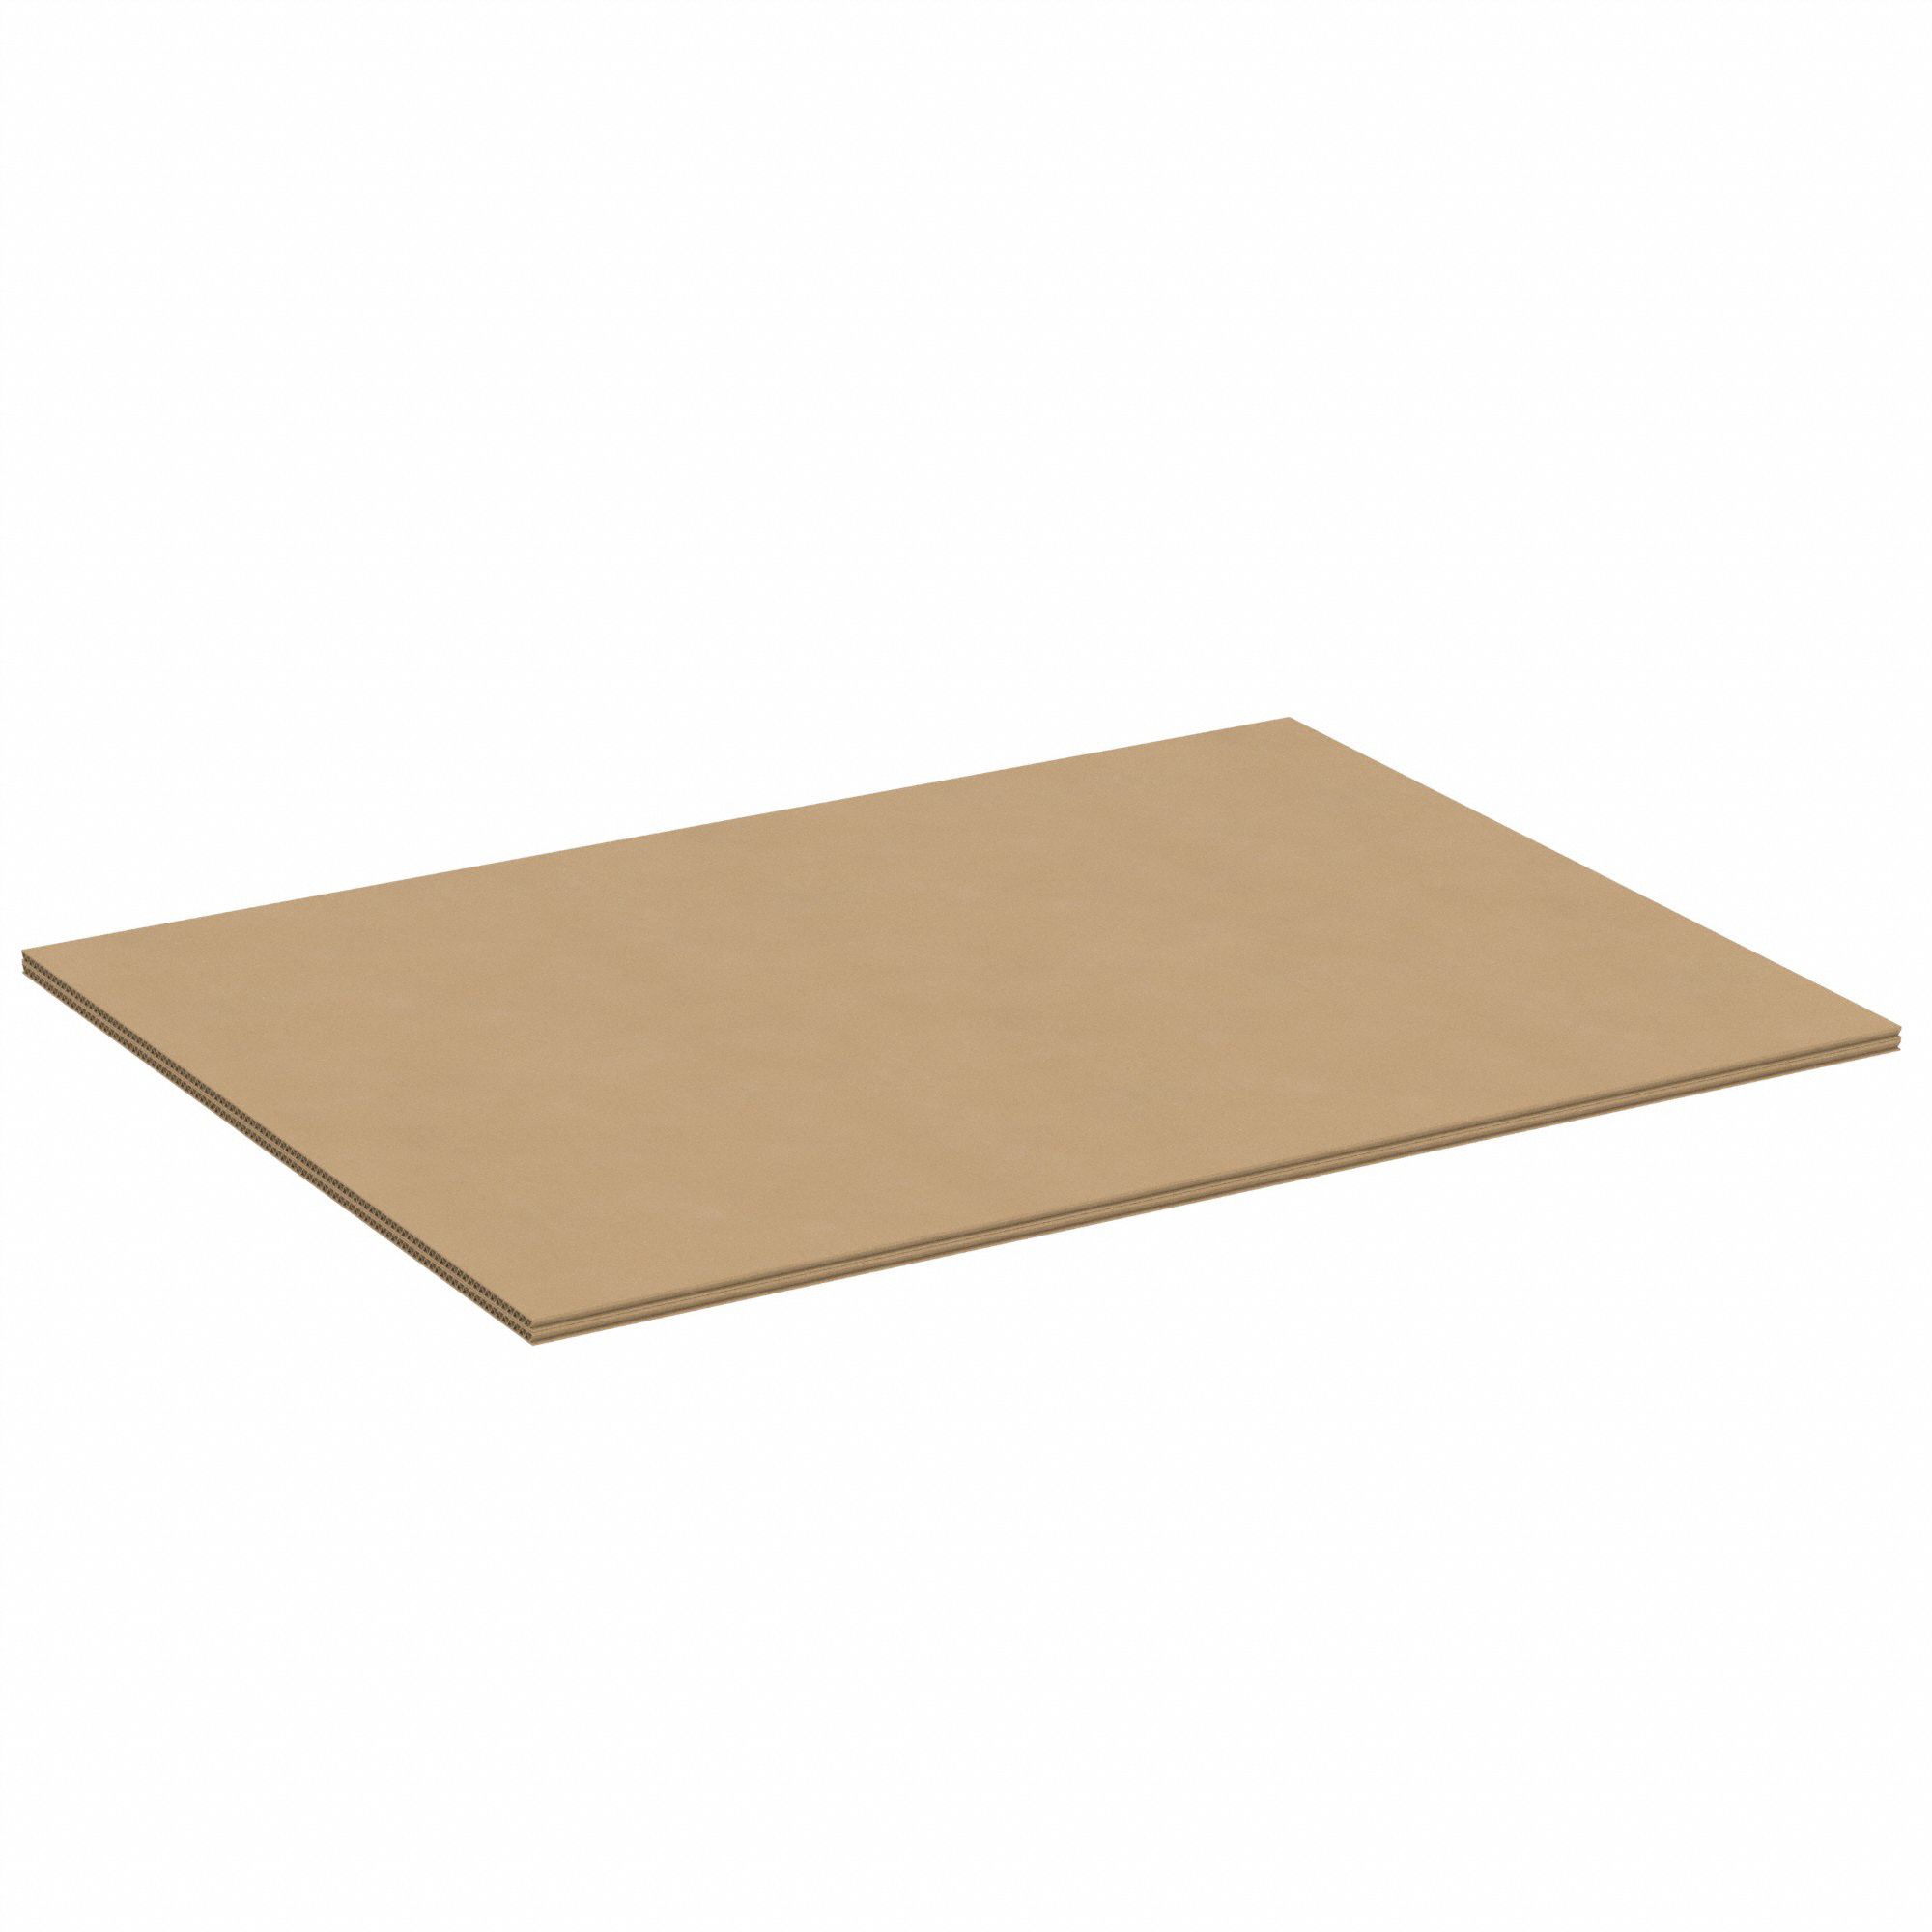 cardboard sheets 4x8